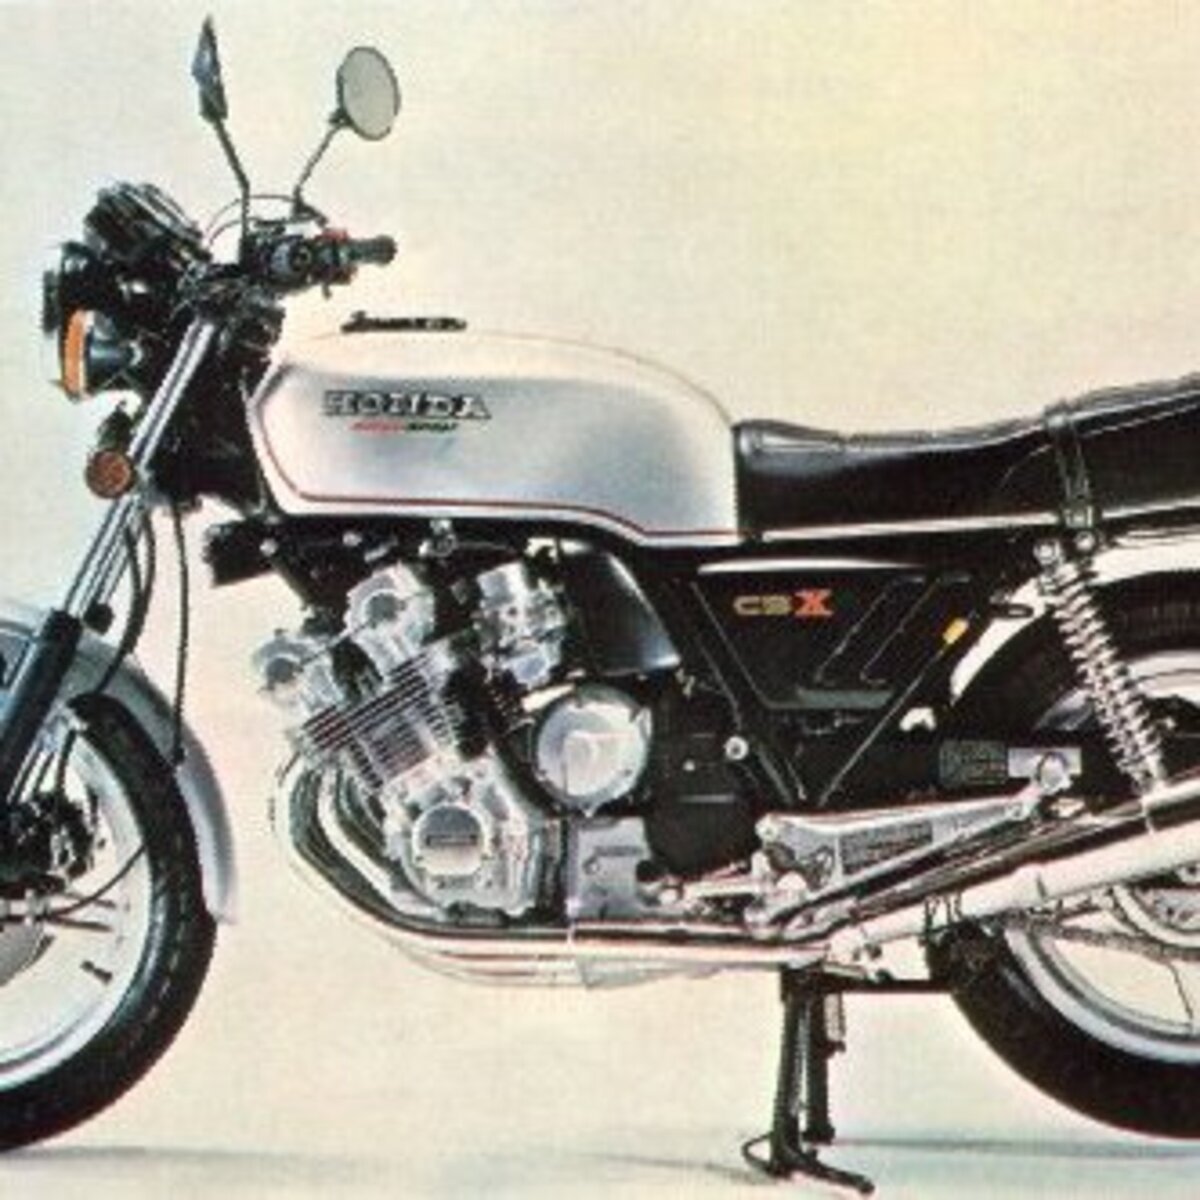 Honda CBX 1000 (1978 - 81)